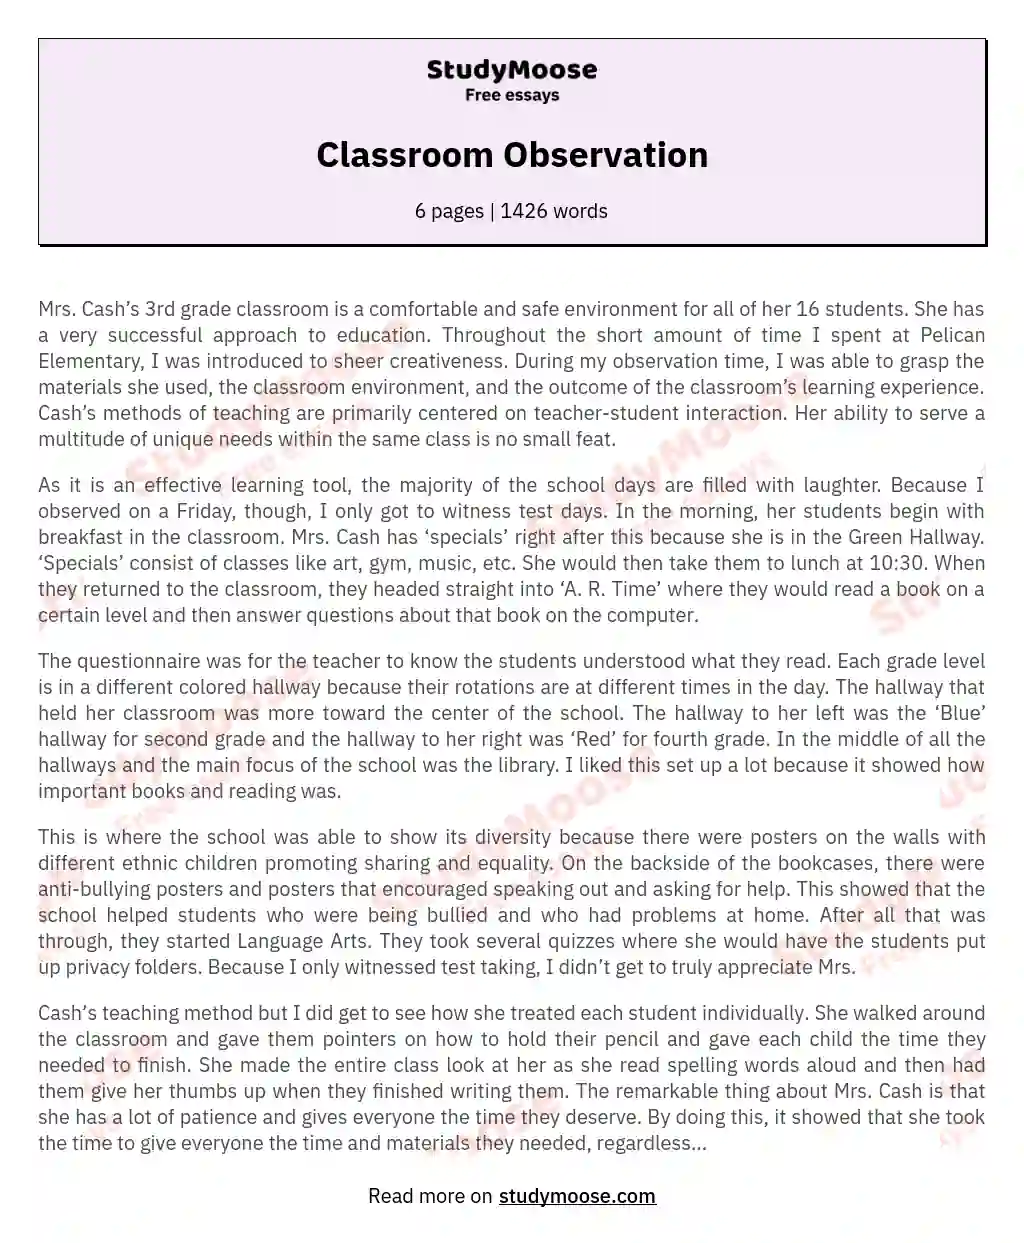 Classroom Observation essay